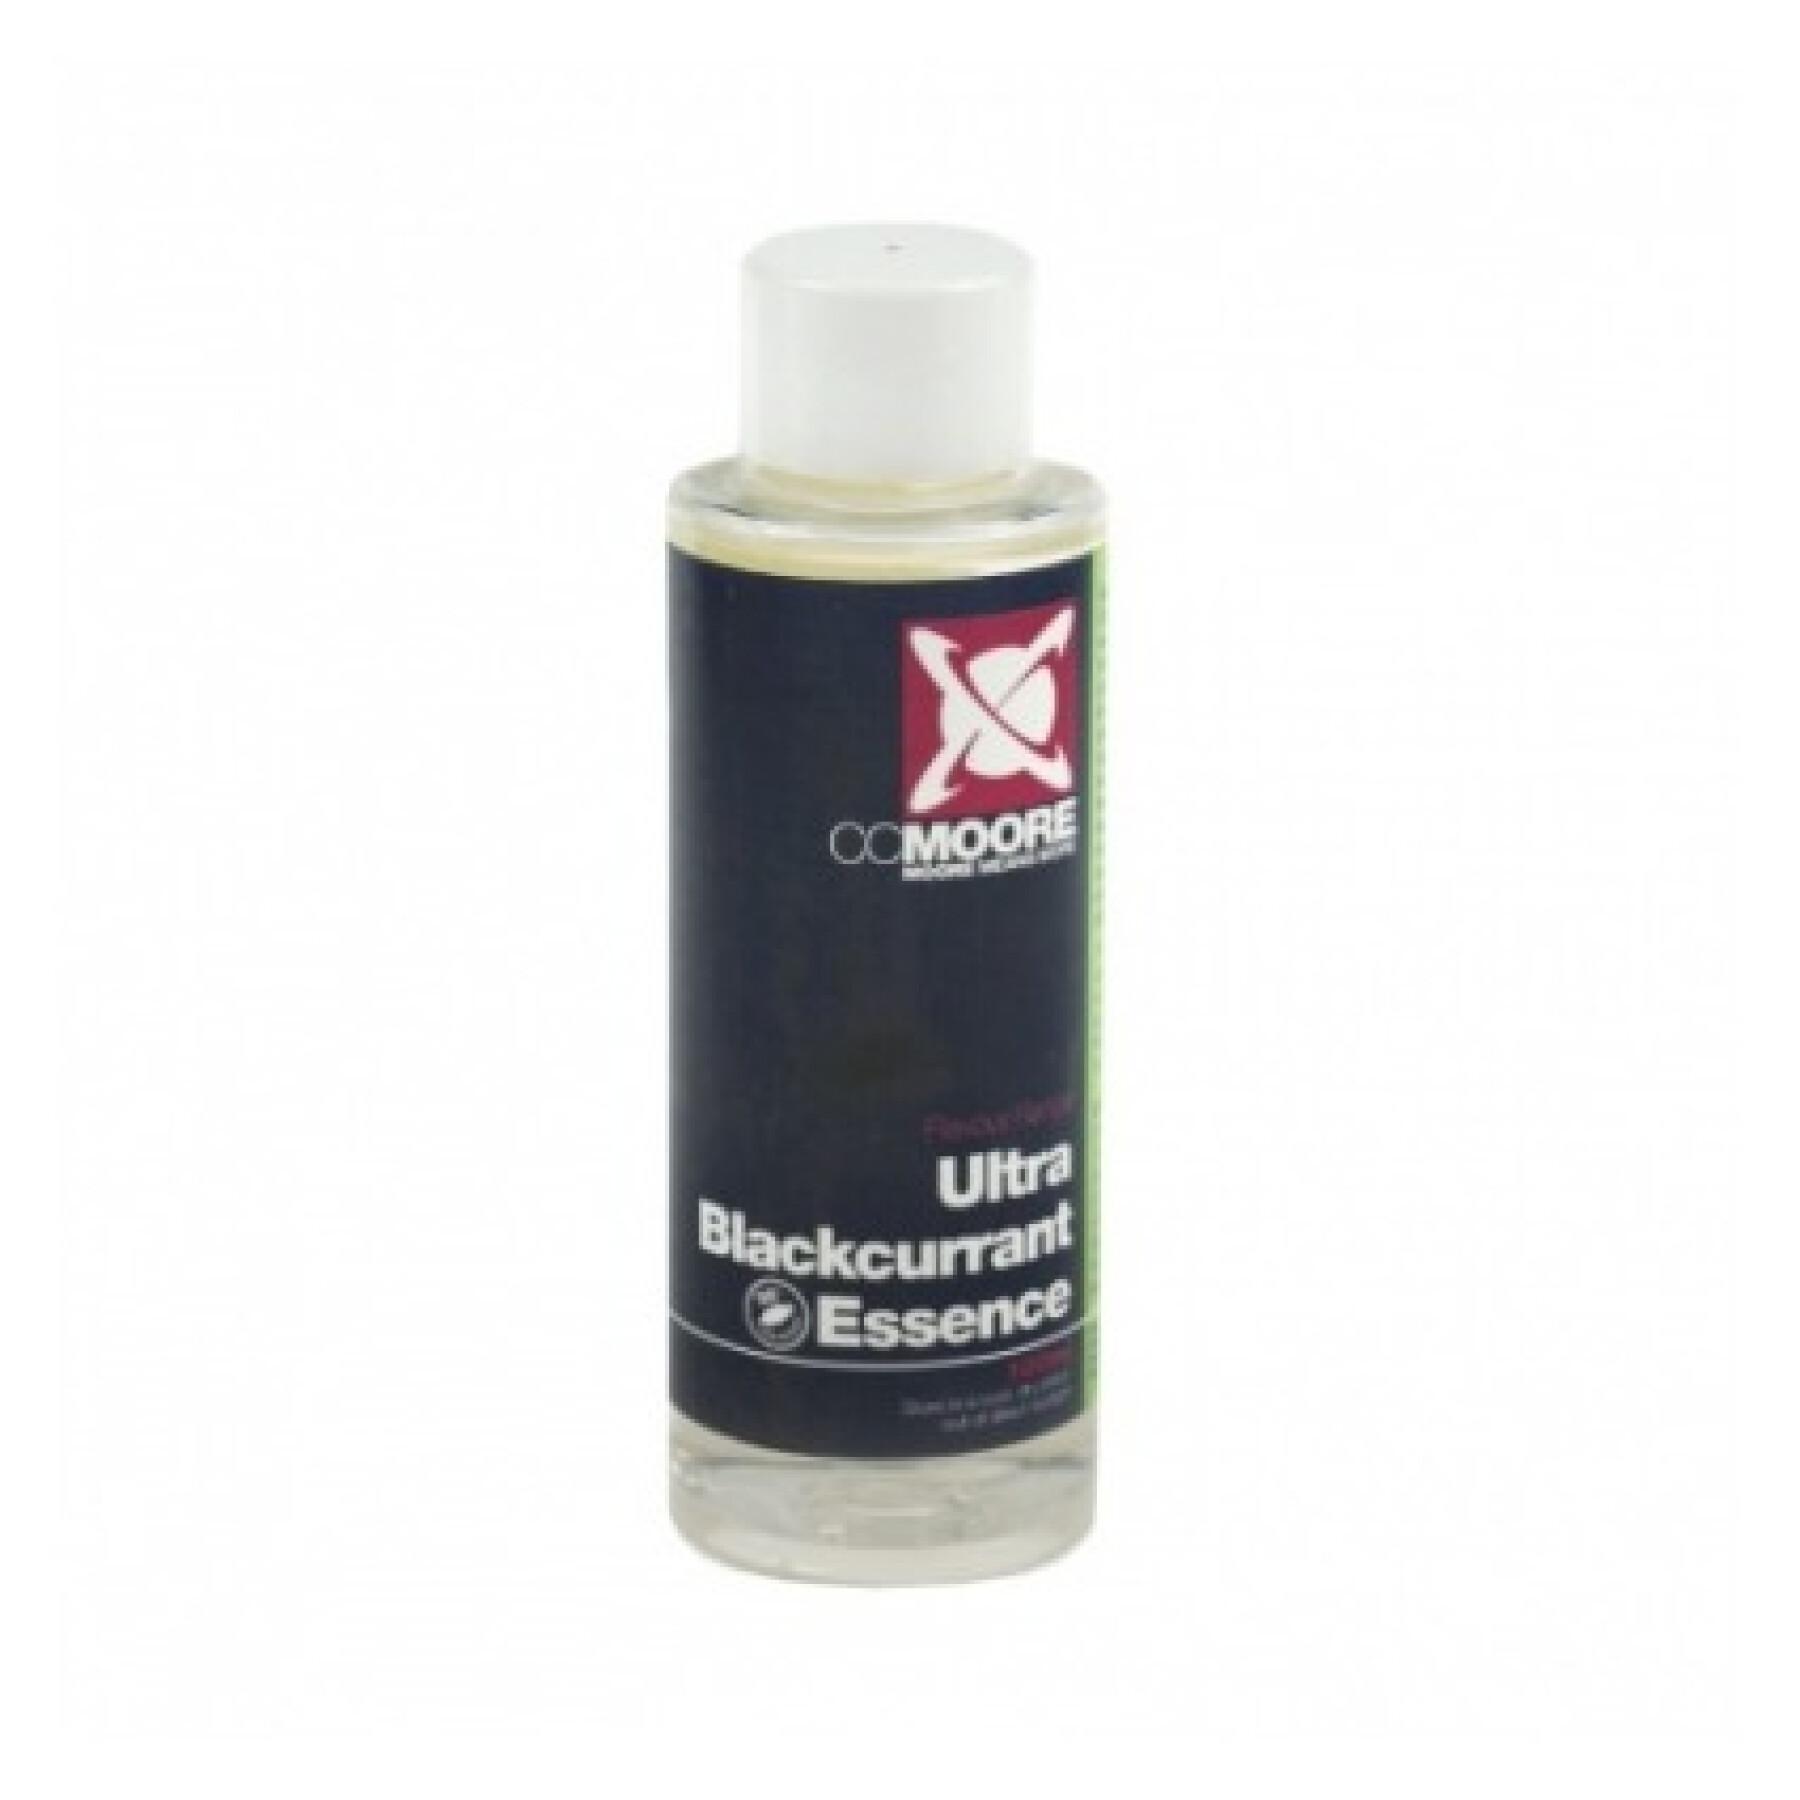 Liquidi additivi CCMoore Ultra Blackcurrant Essence 100ml